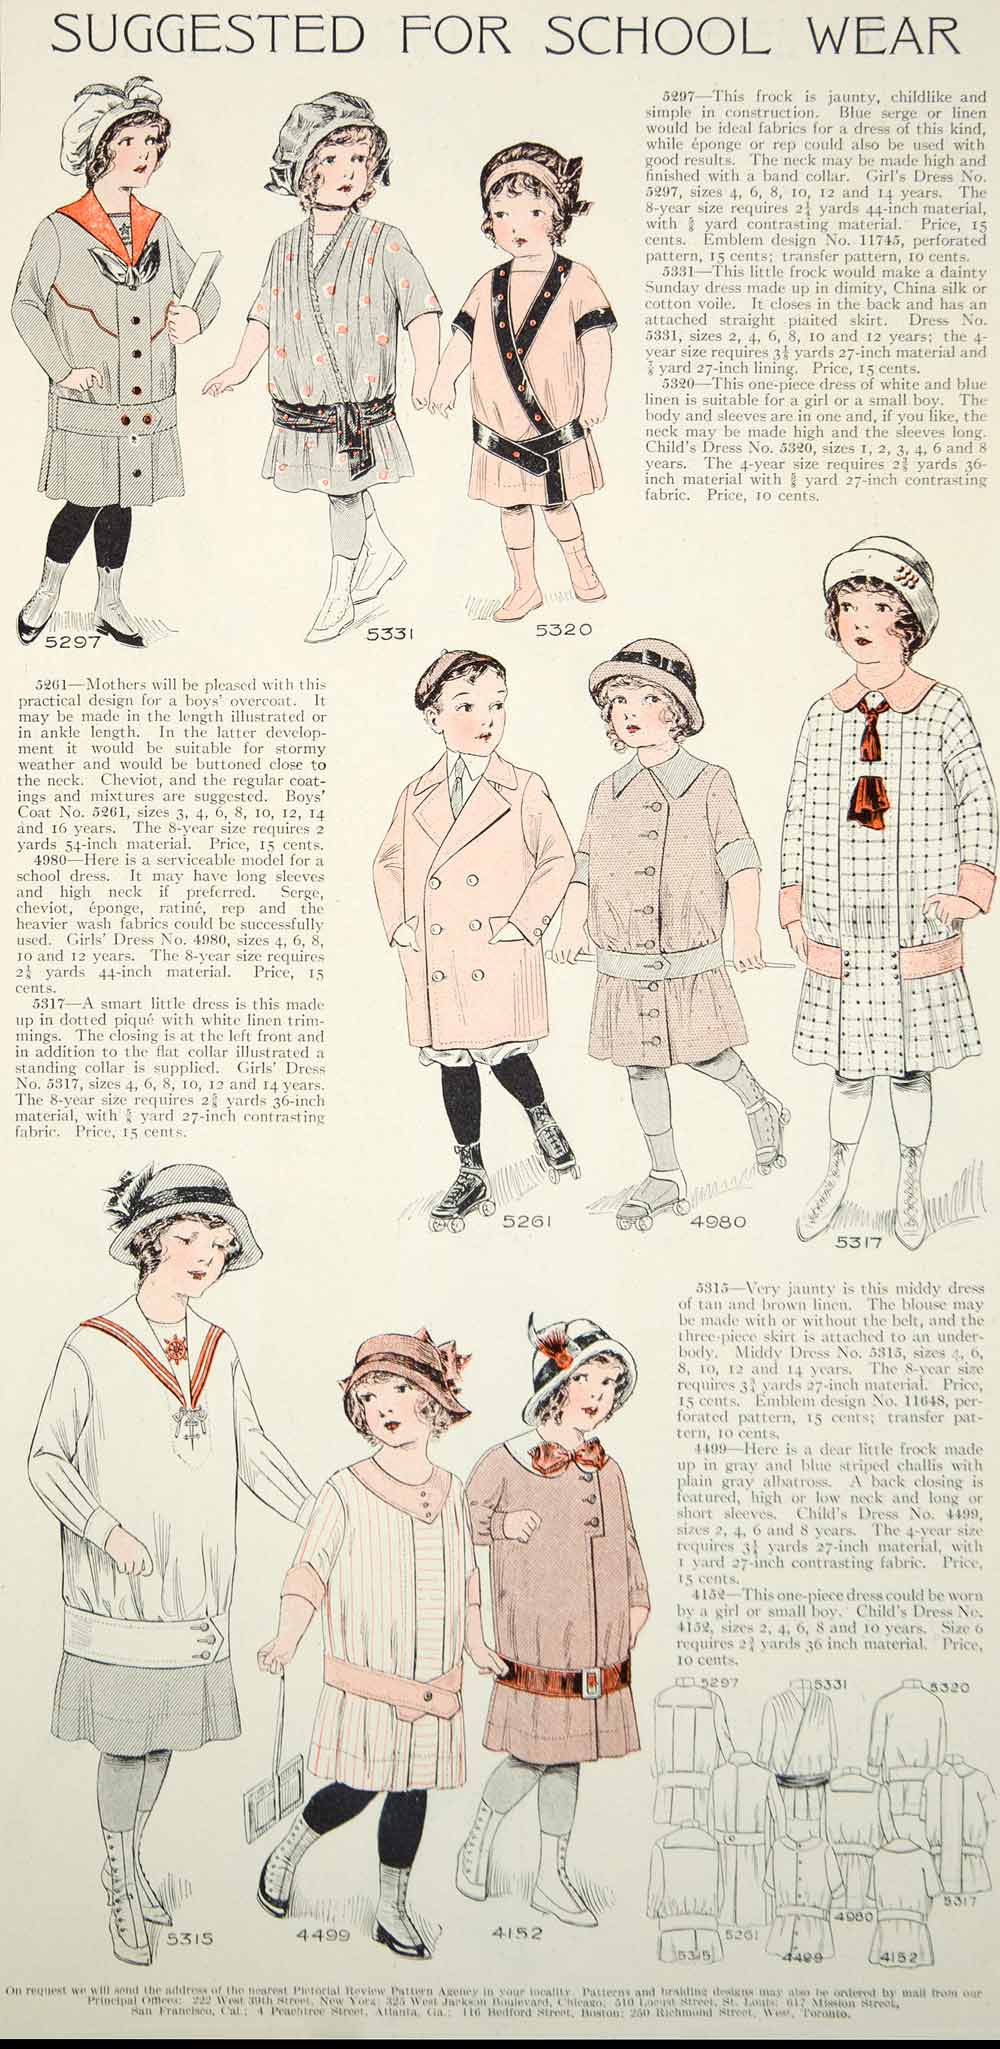 1913 Color Print Edwardian Fashion Illustrations Children School Dress Girl Boy